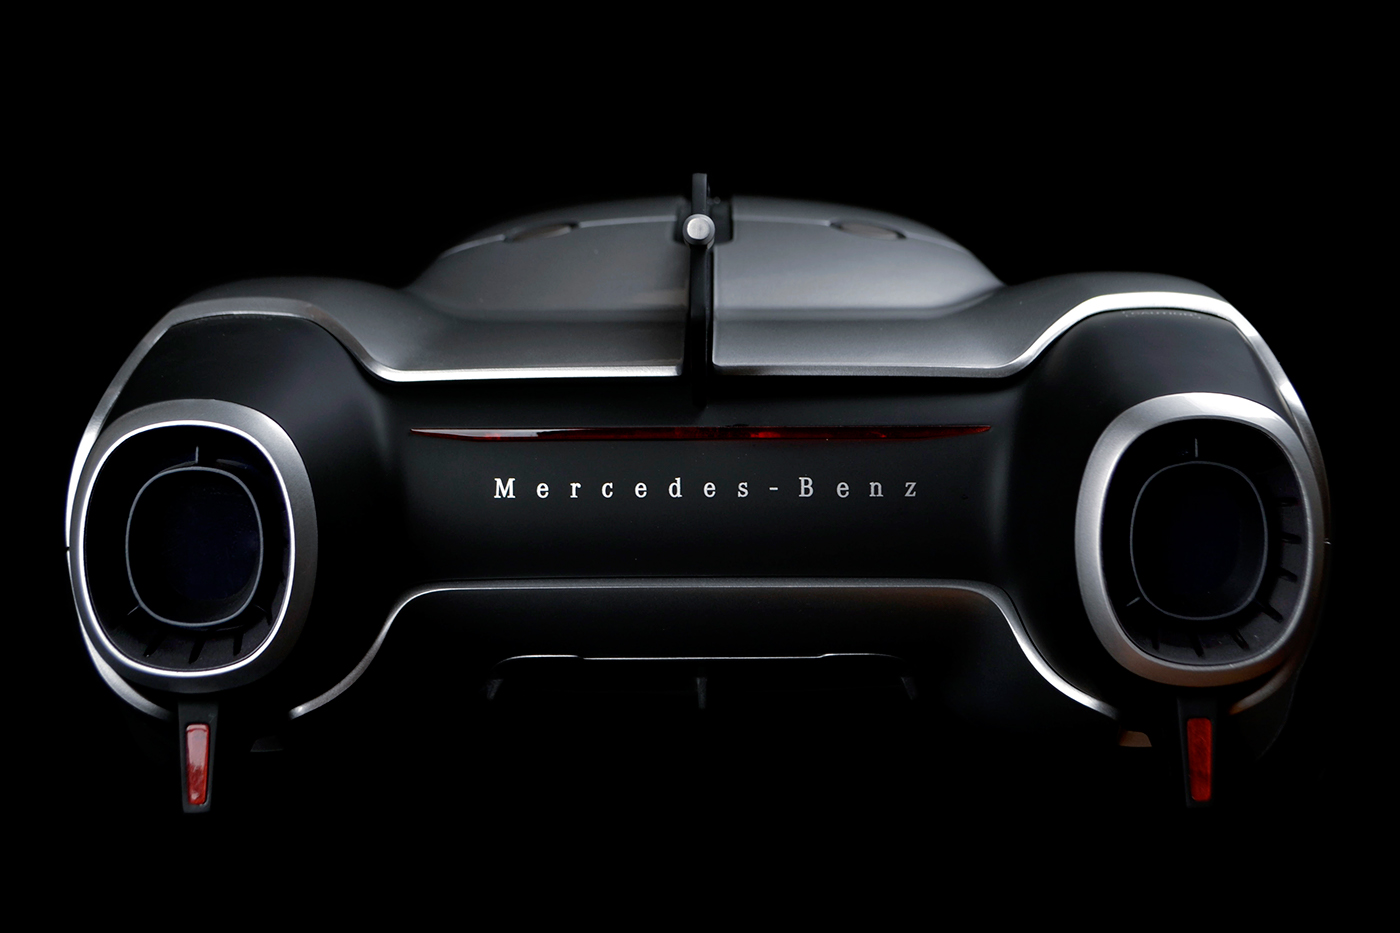 mercedes Benz W196R streamliner concept car gt hypercar